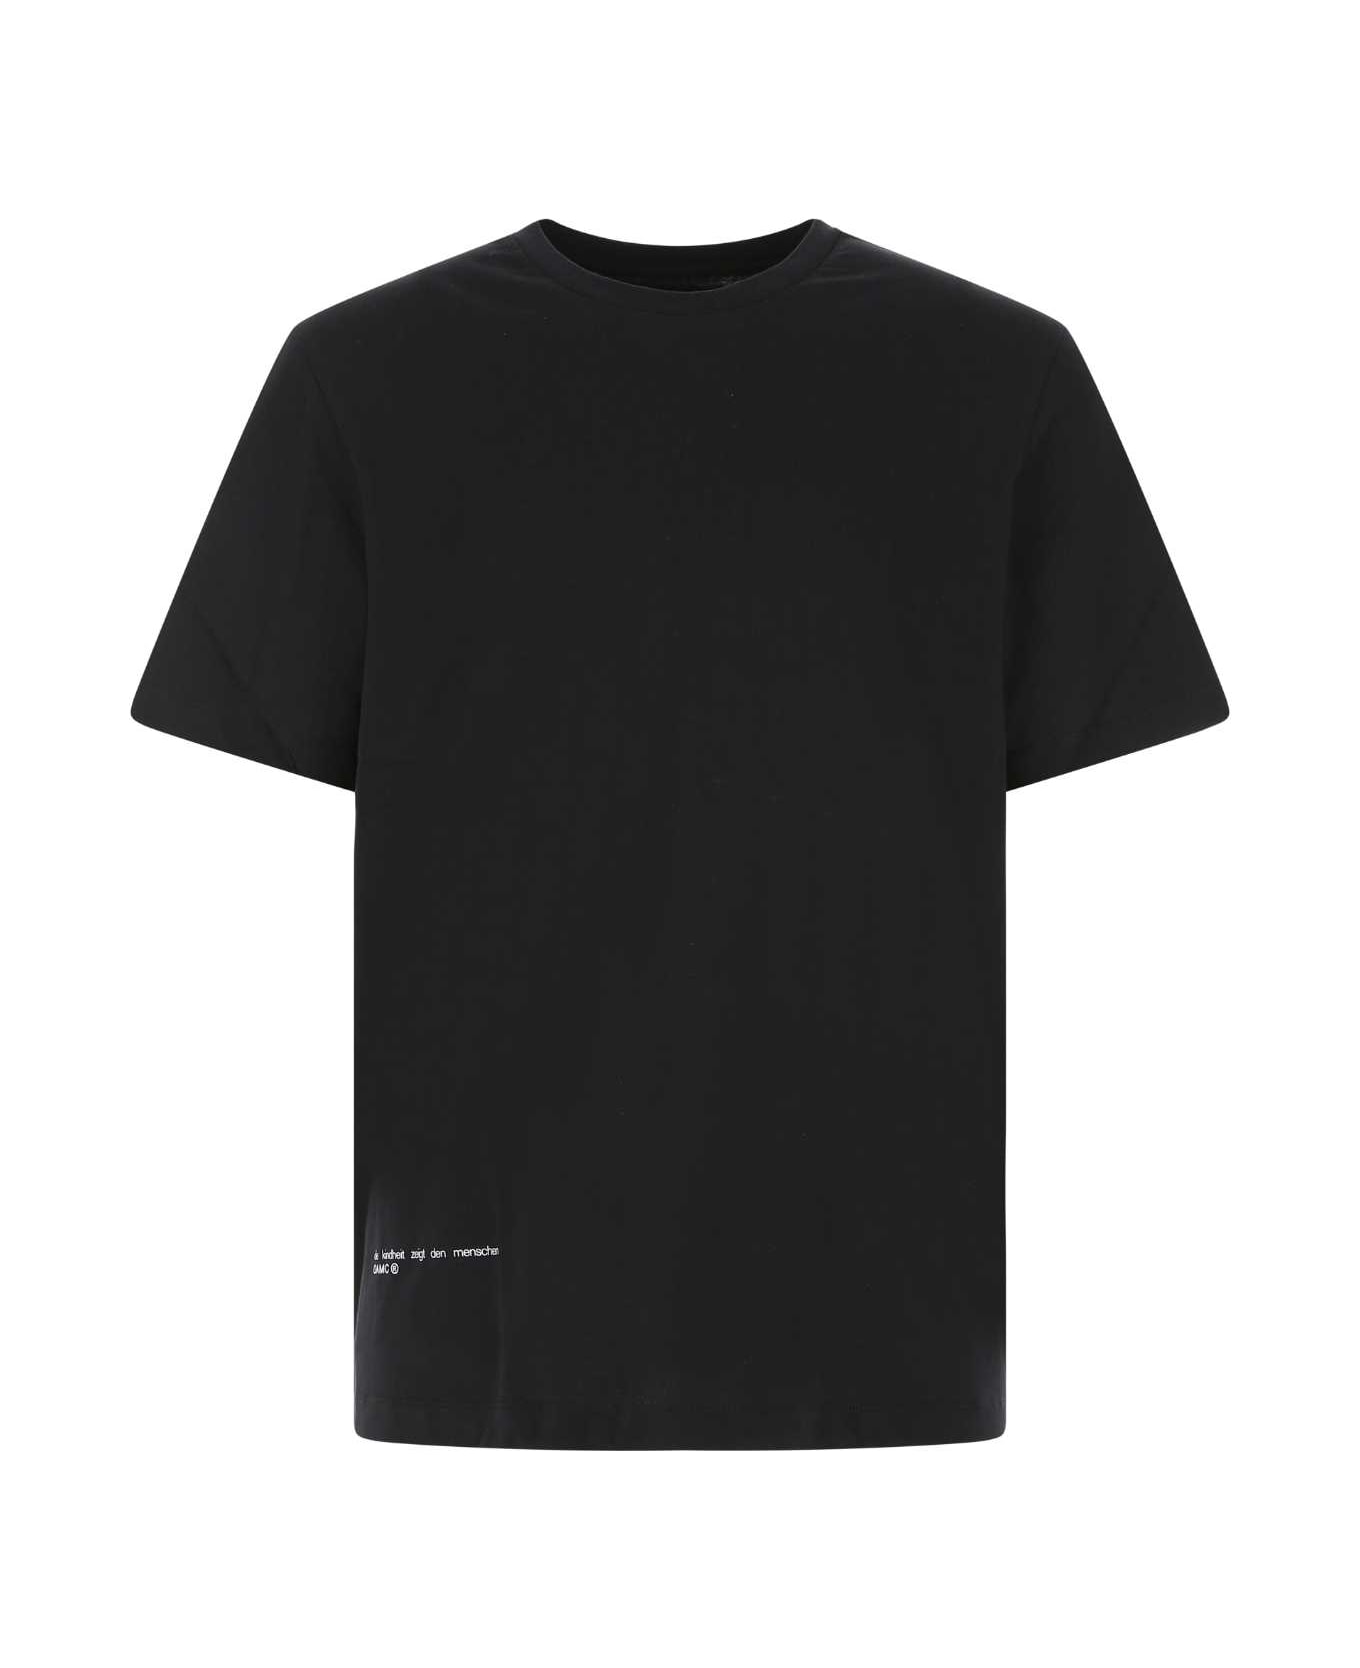 OAMC Black Cotton T-shirt - 001